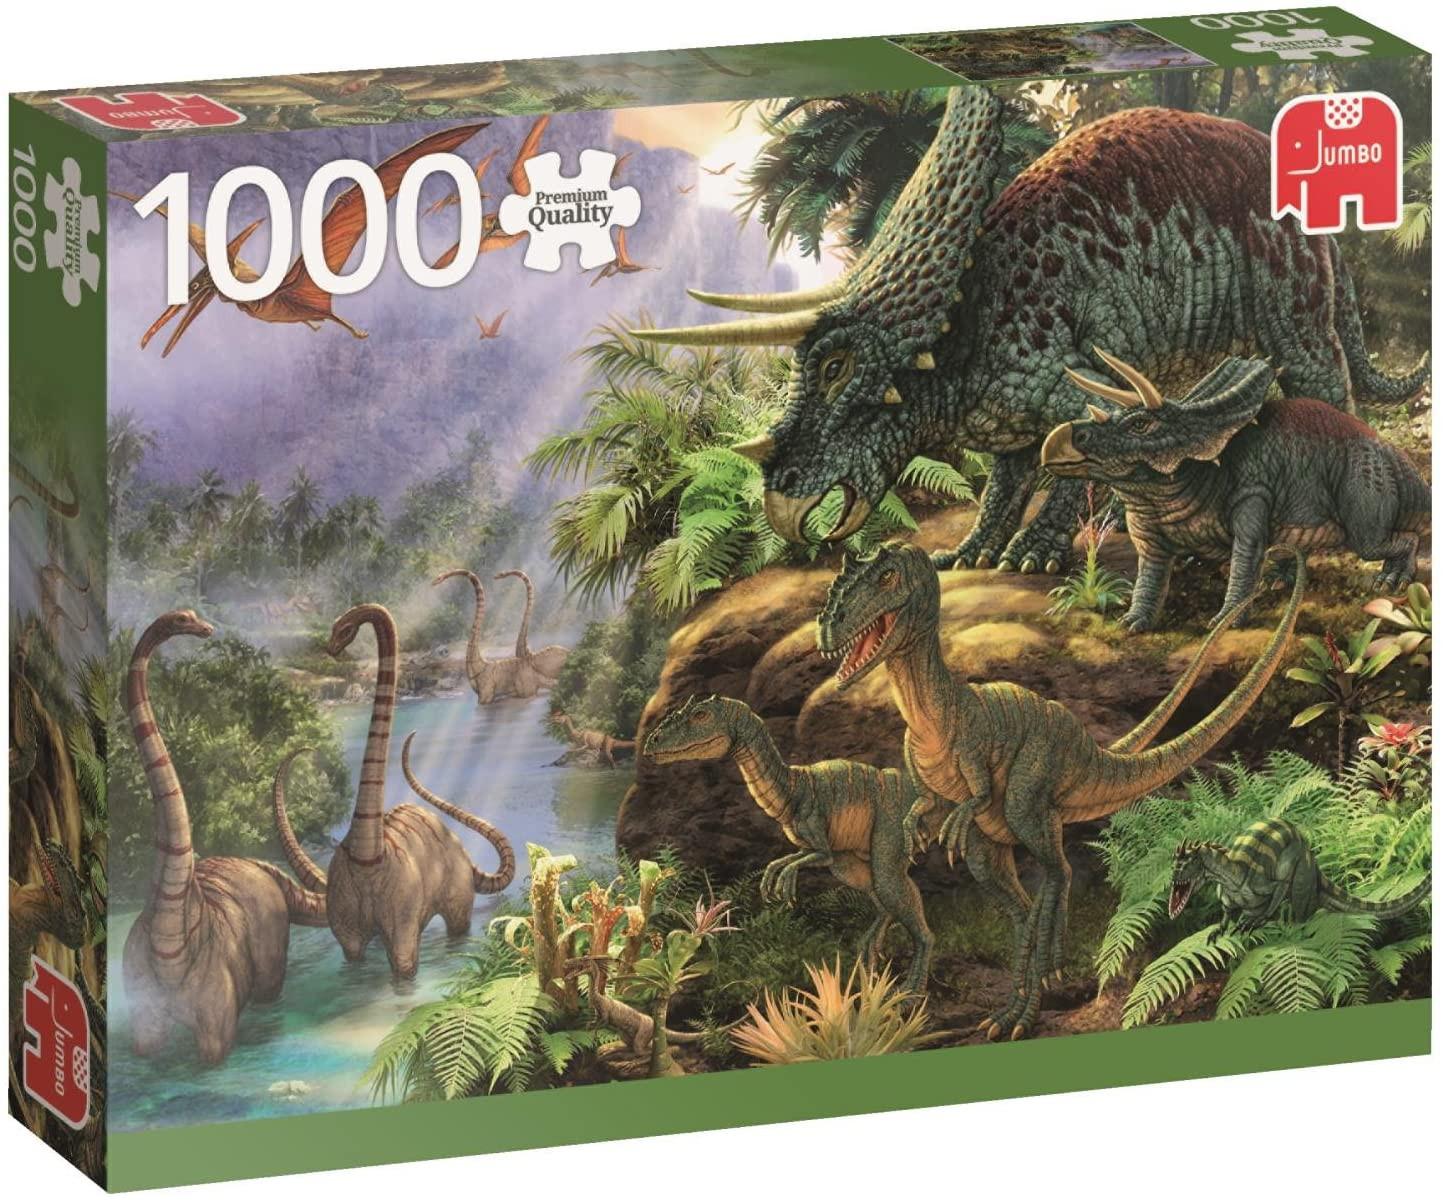 Puzzle 1000 pzs. PC Dinosaur Valley